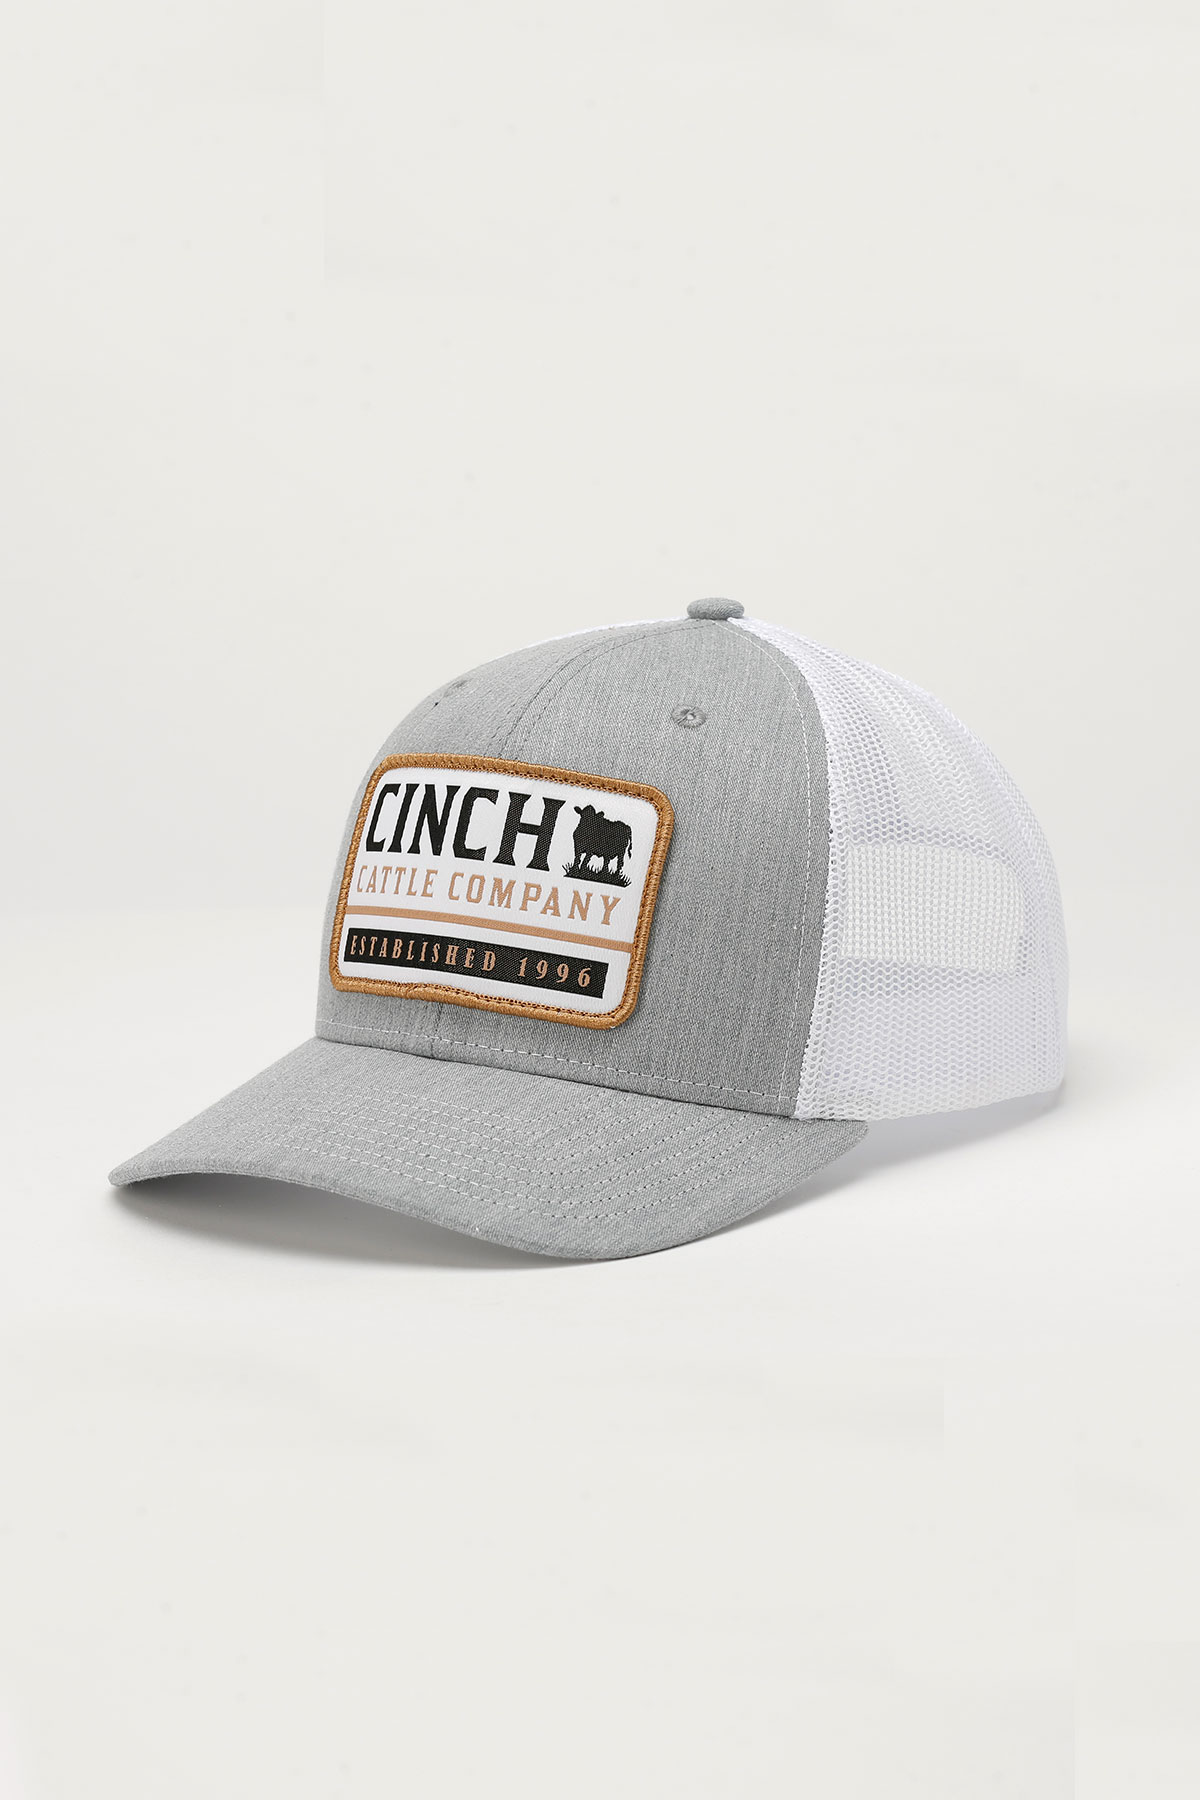 cinch cattel co snapback cap